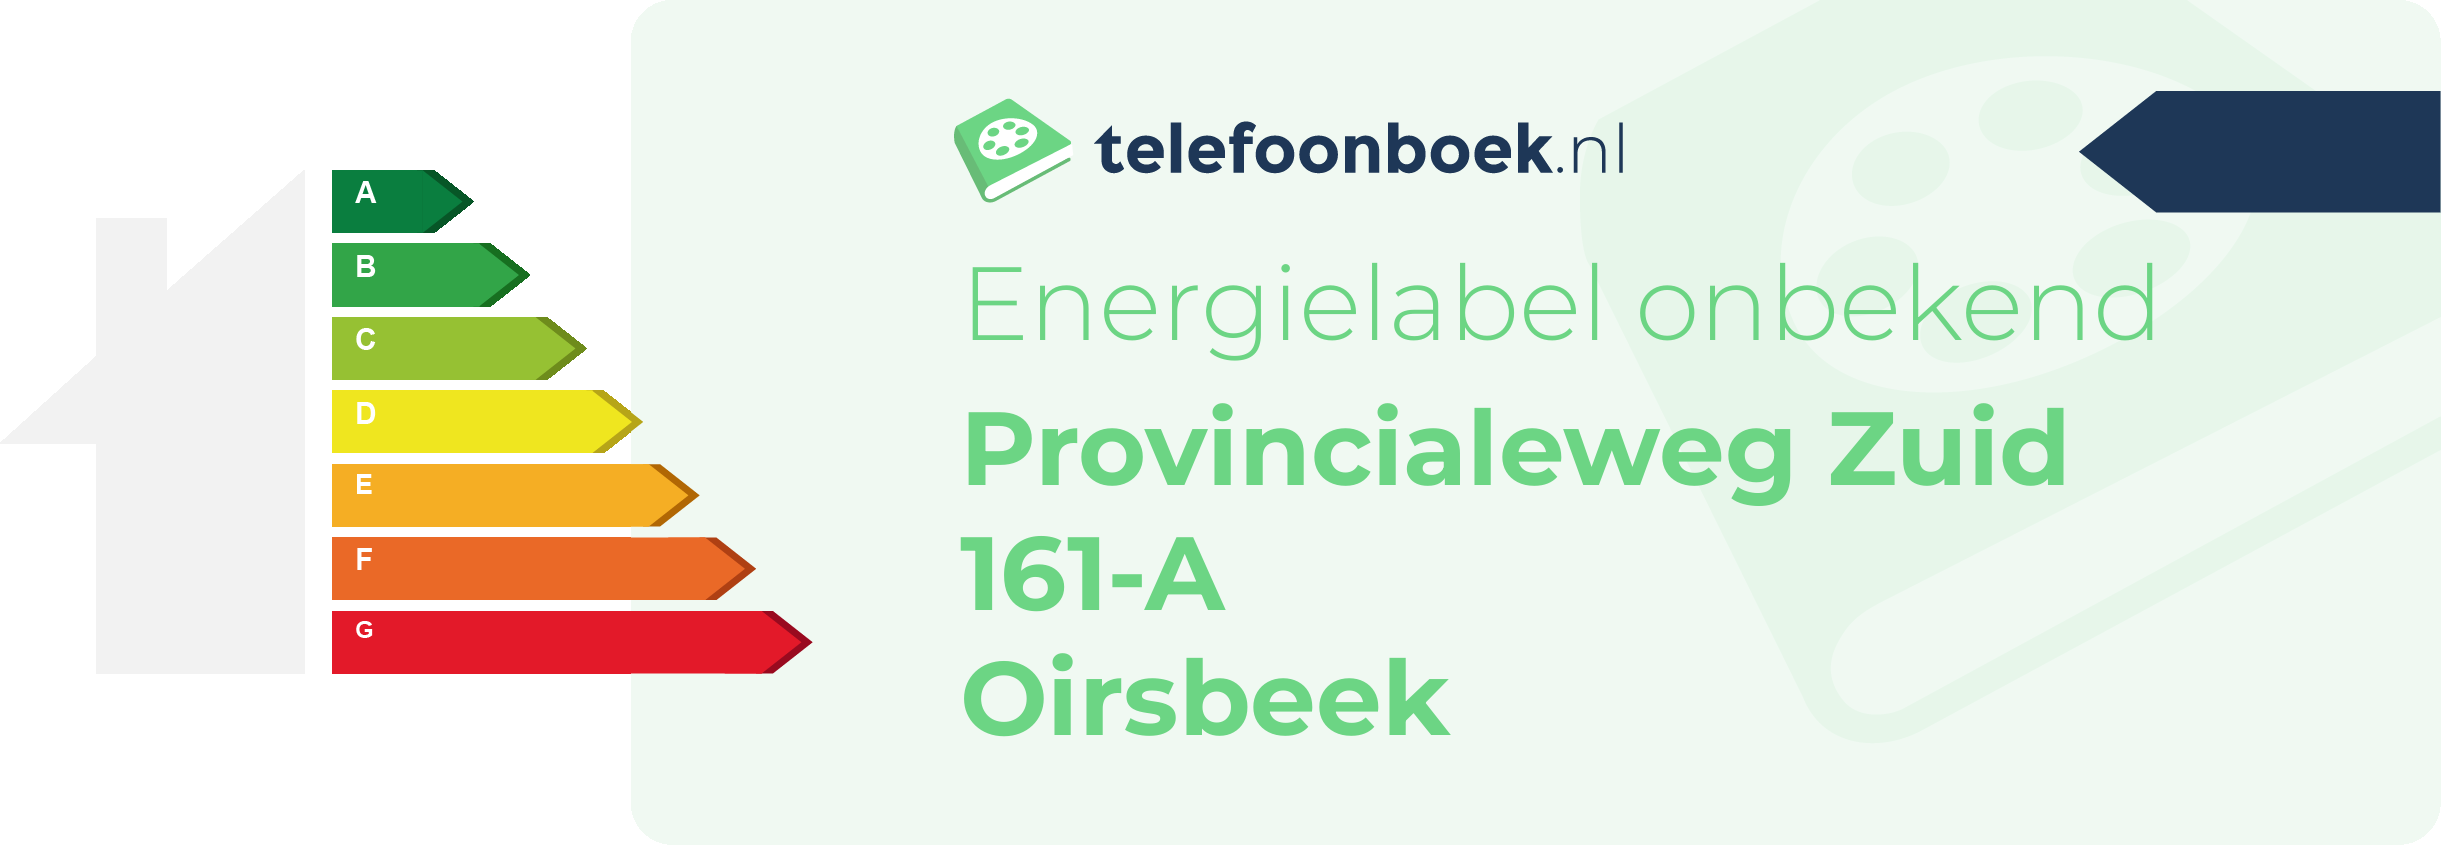 Energielabel Provincialeweg Zuid 161-A Oirsbeek